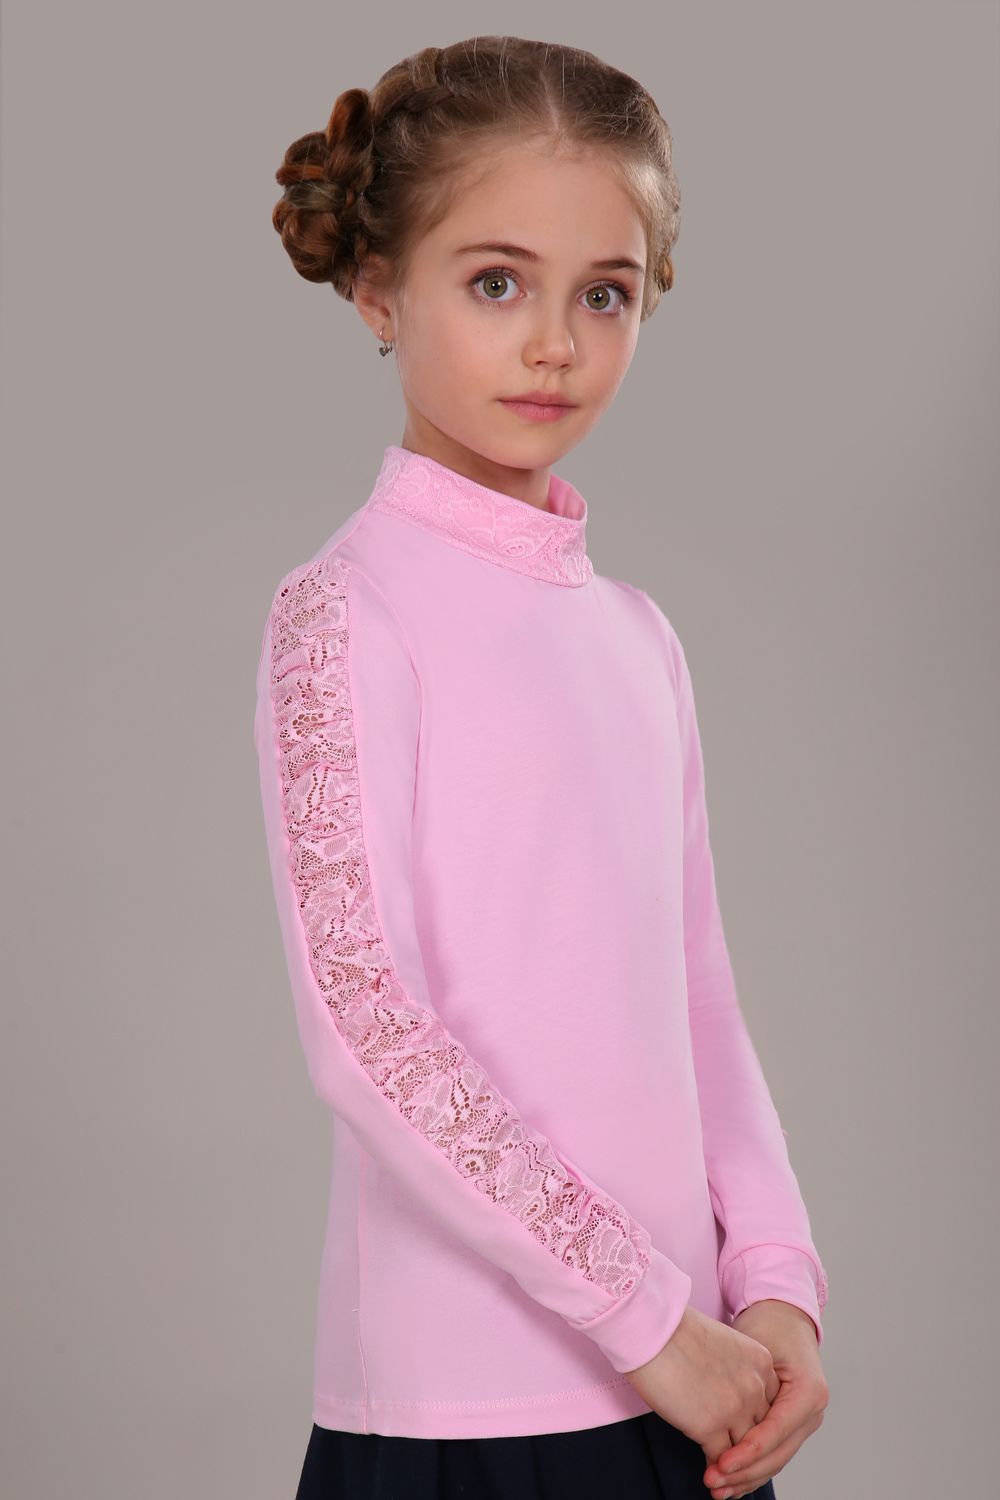 Блузка для девочки Каролина New арт.13118N - светло-розовый